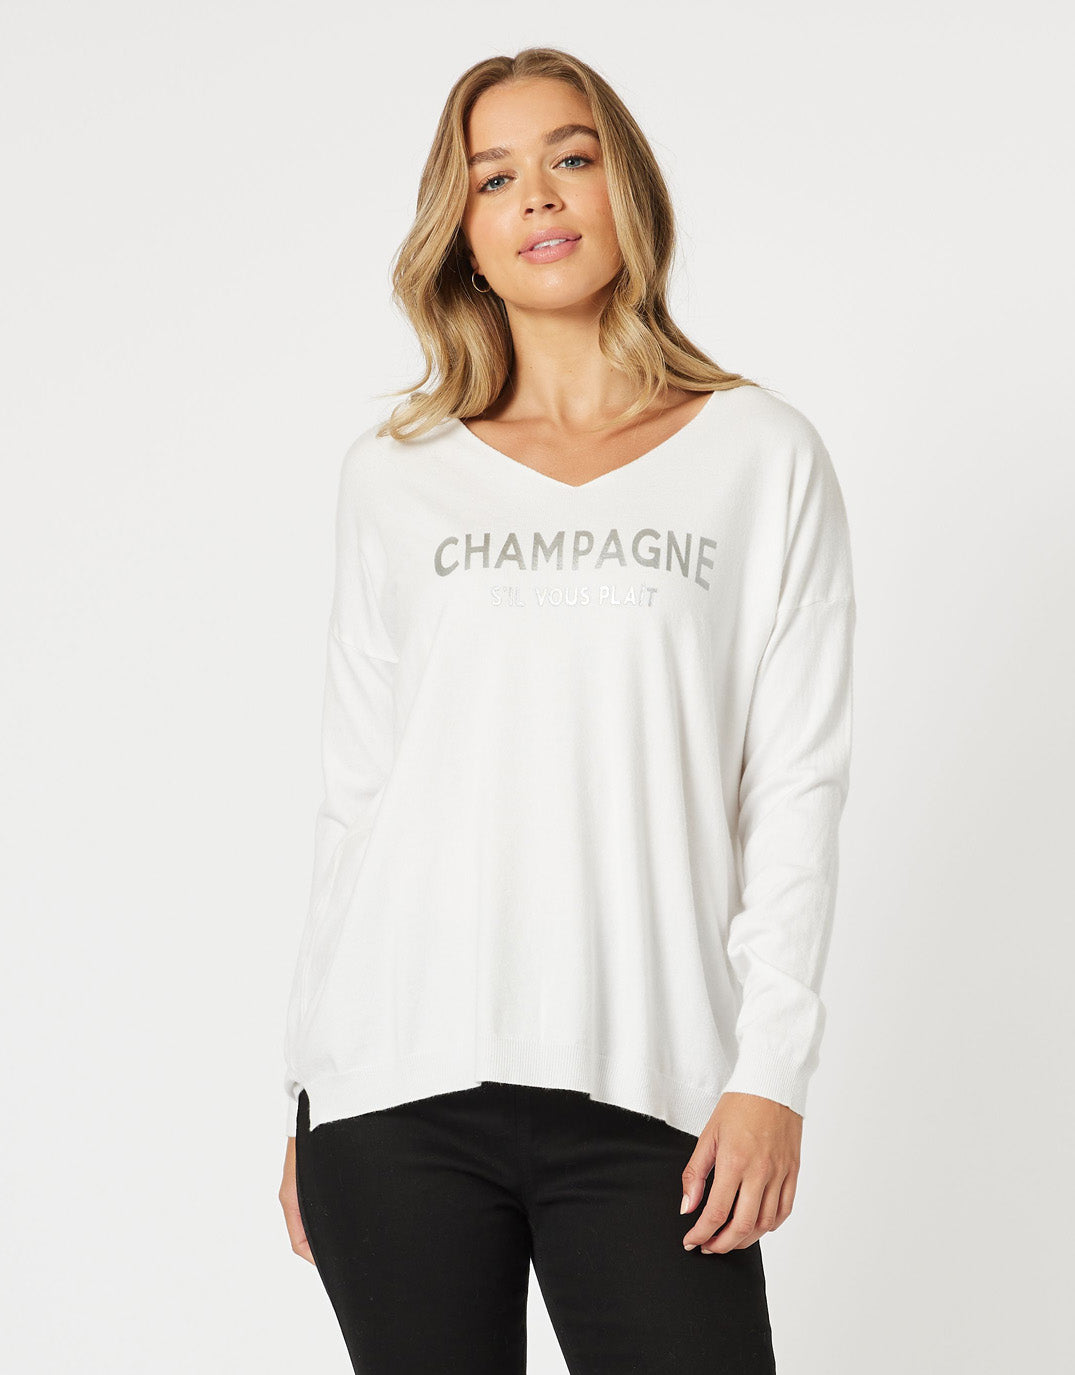 threadz-champagne-knit-white-womens-clothing